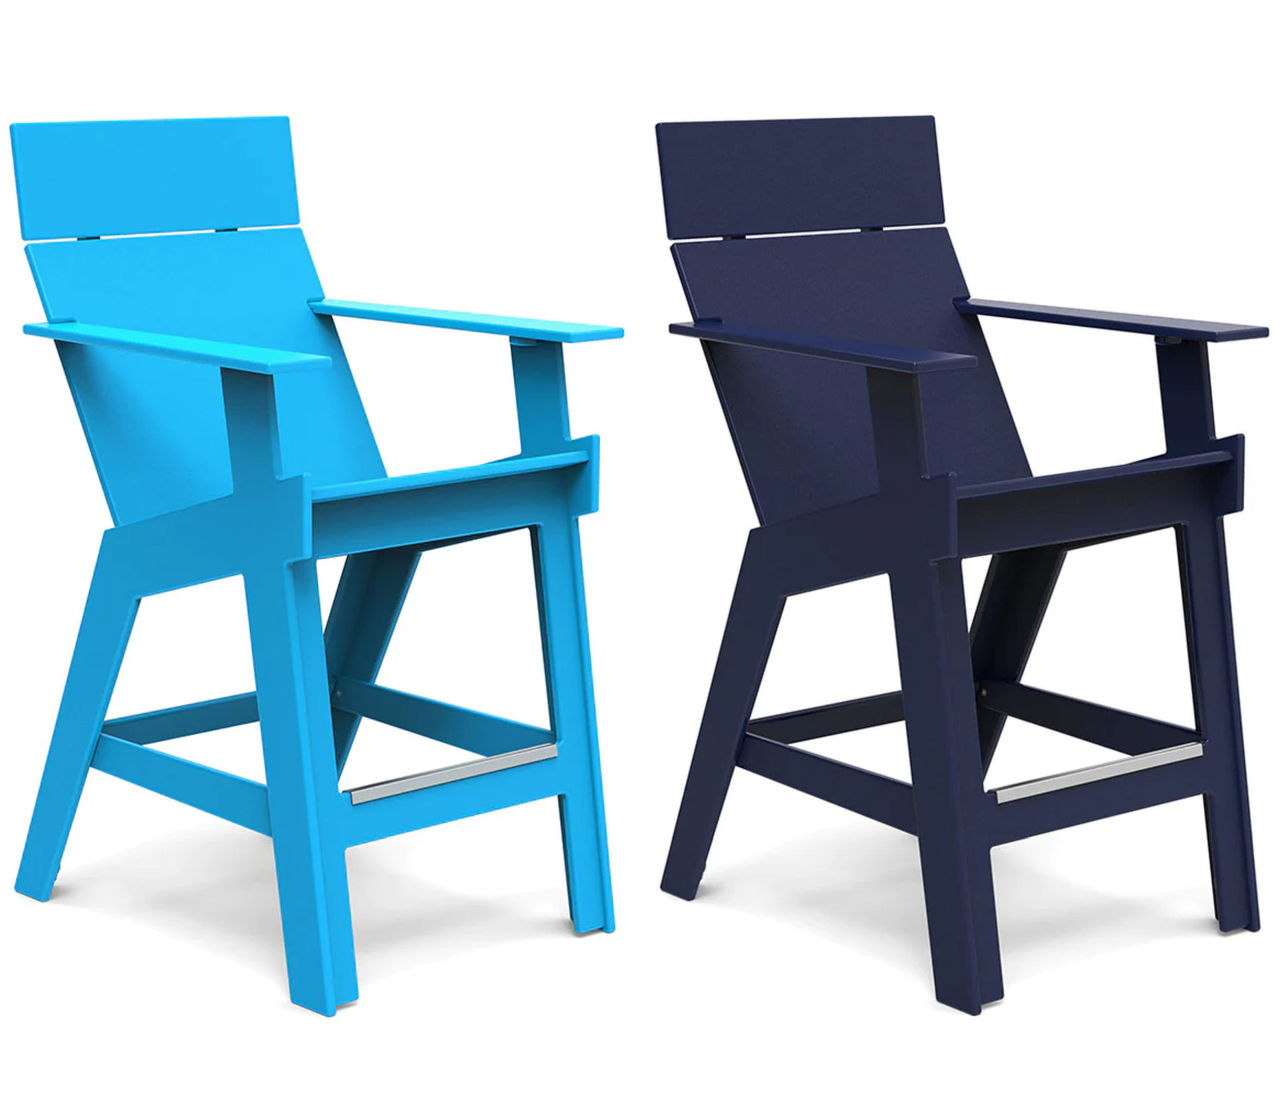 Lollygagger Hi-Rise Chair Modular Design-Color variant 3